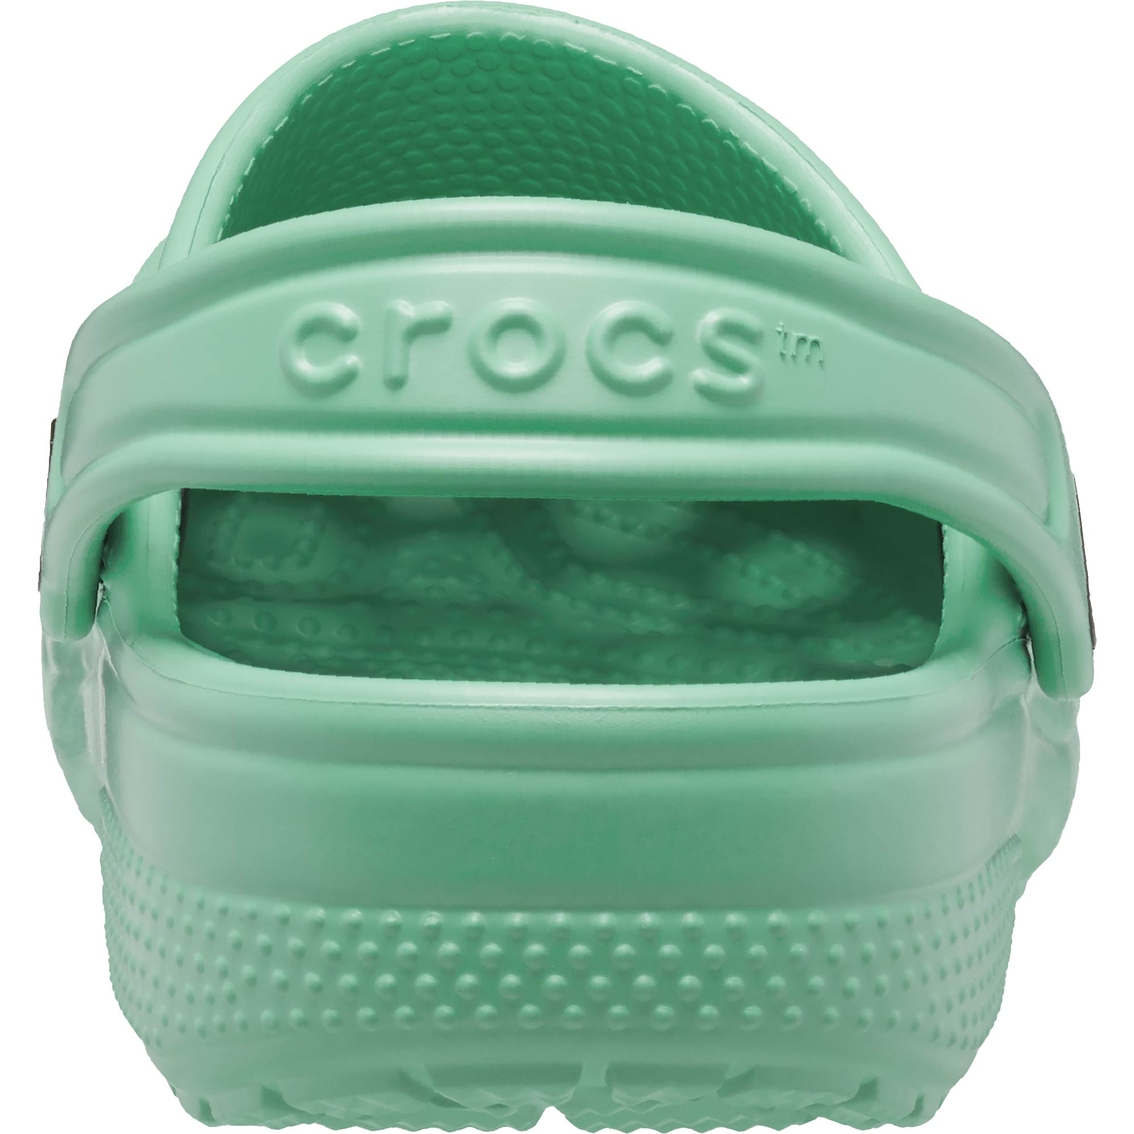 Crocs Kids Classic Clogs - Image 6 of 6